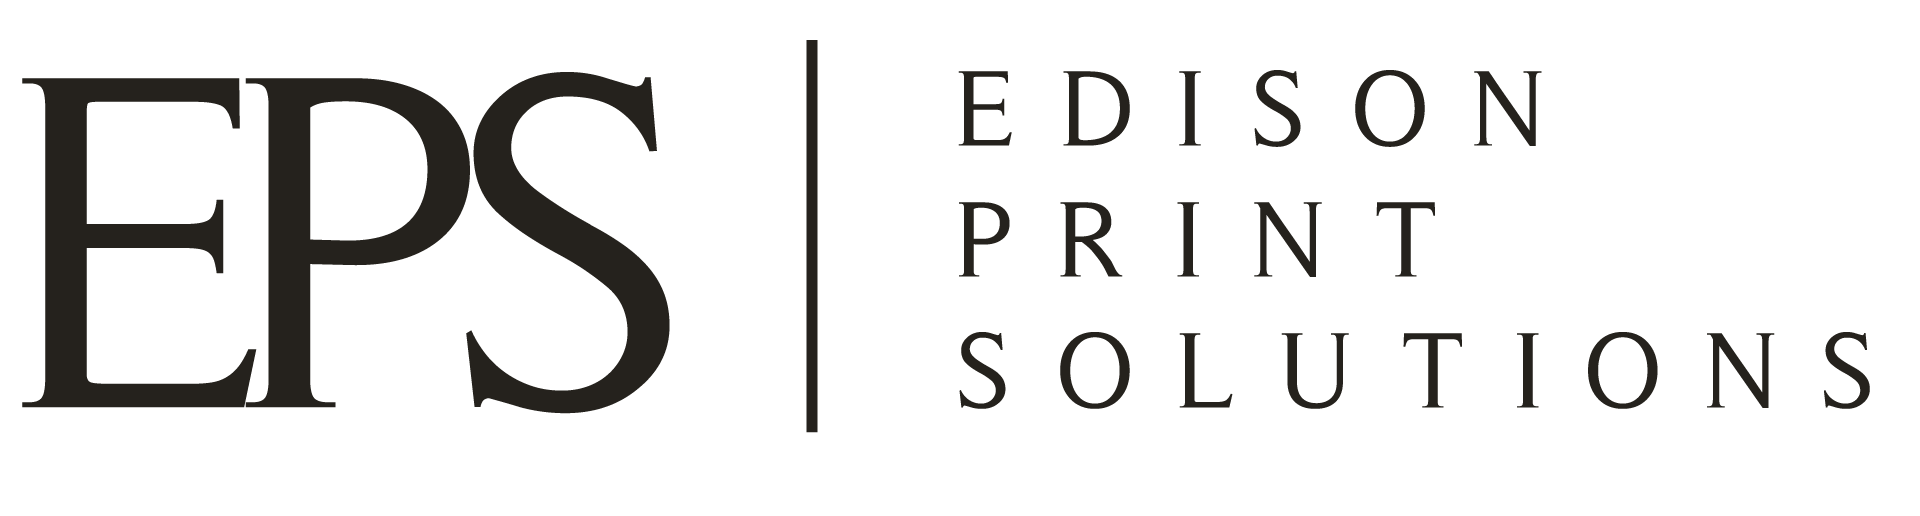 Edison Print Solutions